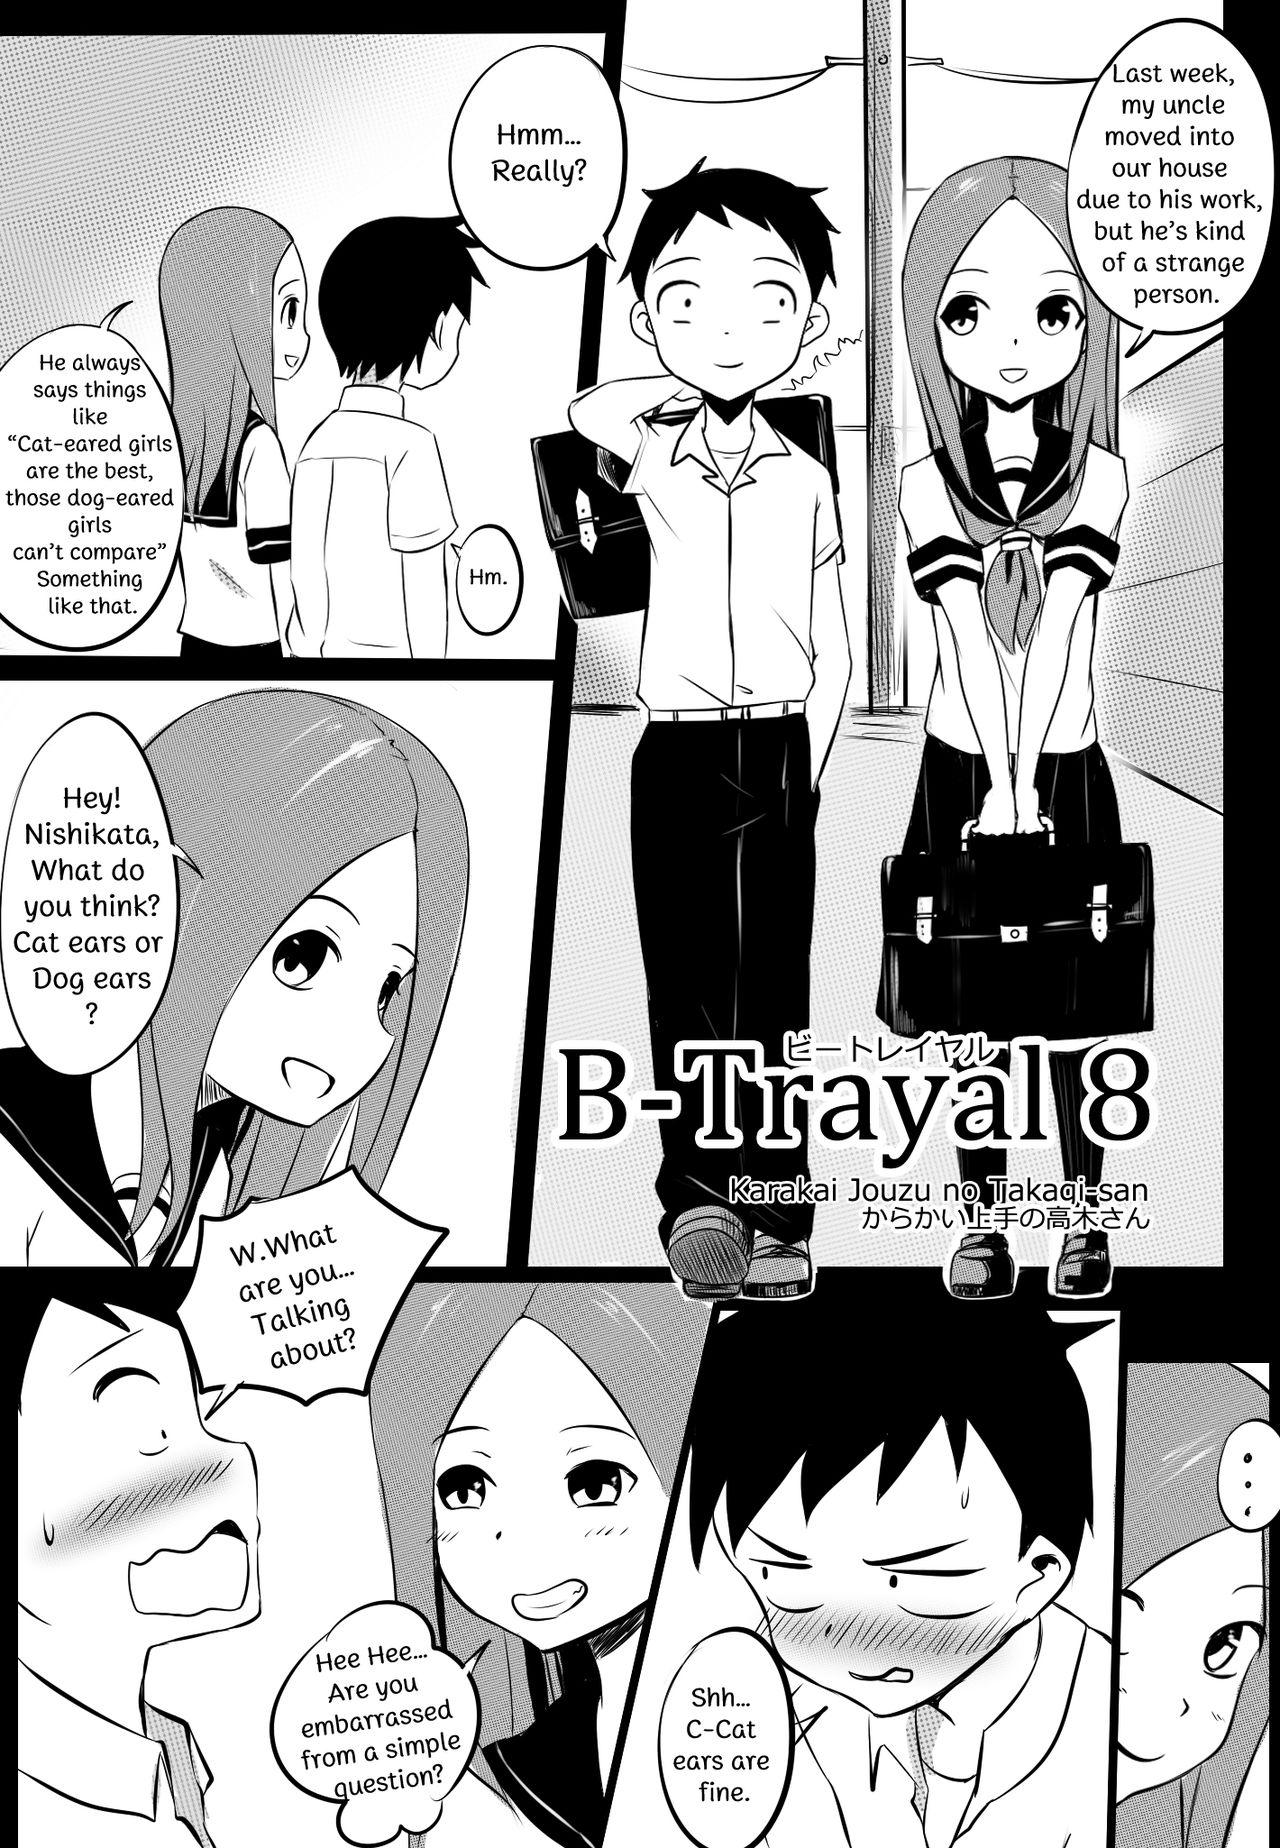 B-Trayal 8 1